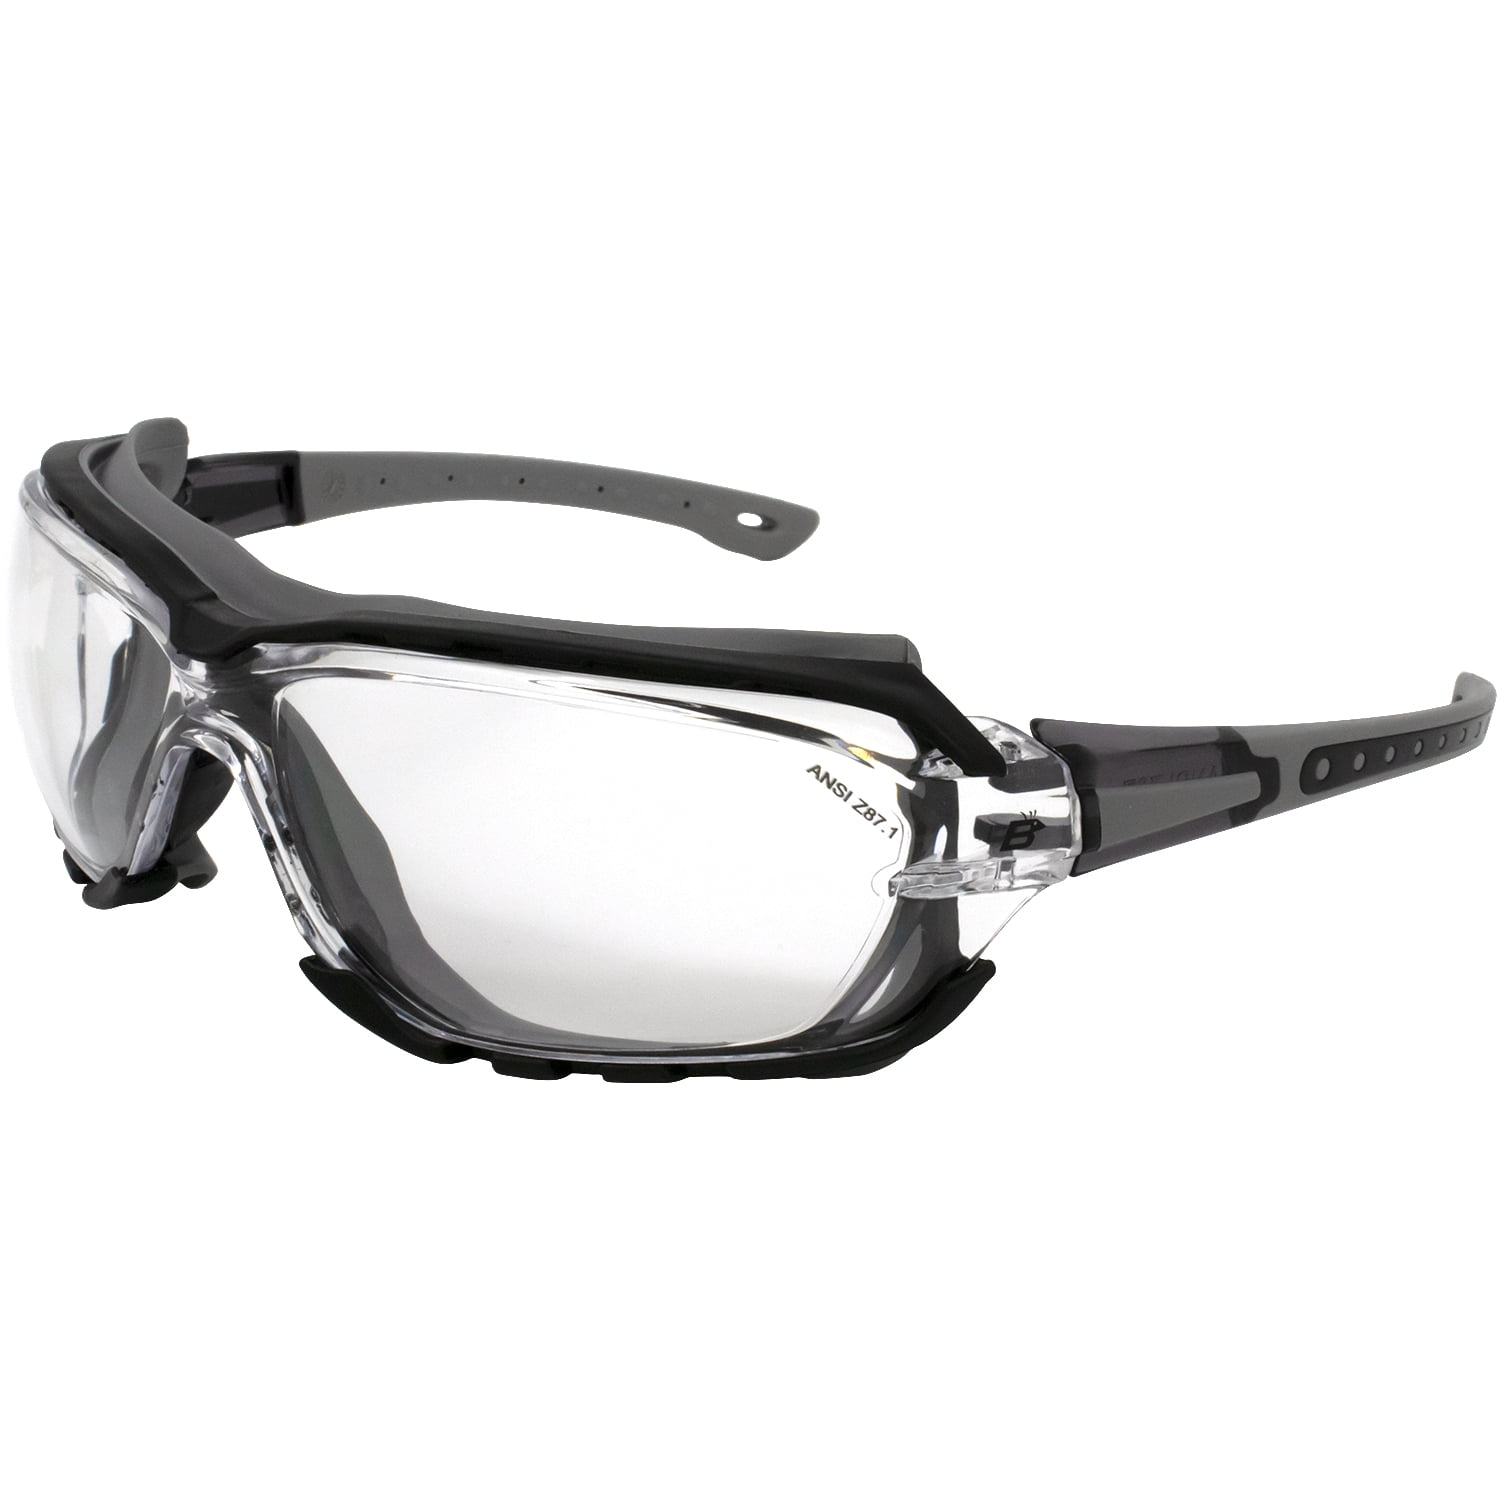 Birdz Eyewear Gasket Safety Padded Motorcycle Sport Sunglasses Grey with Clear Lens 